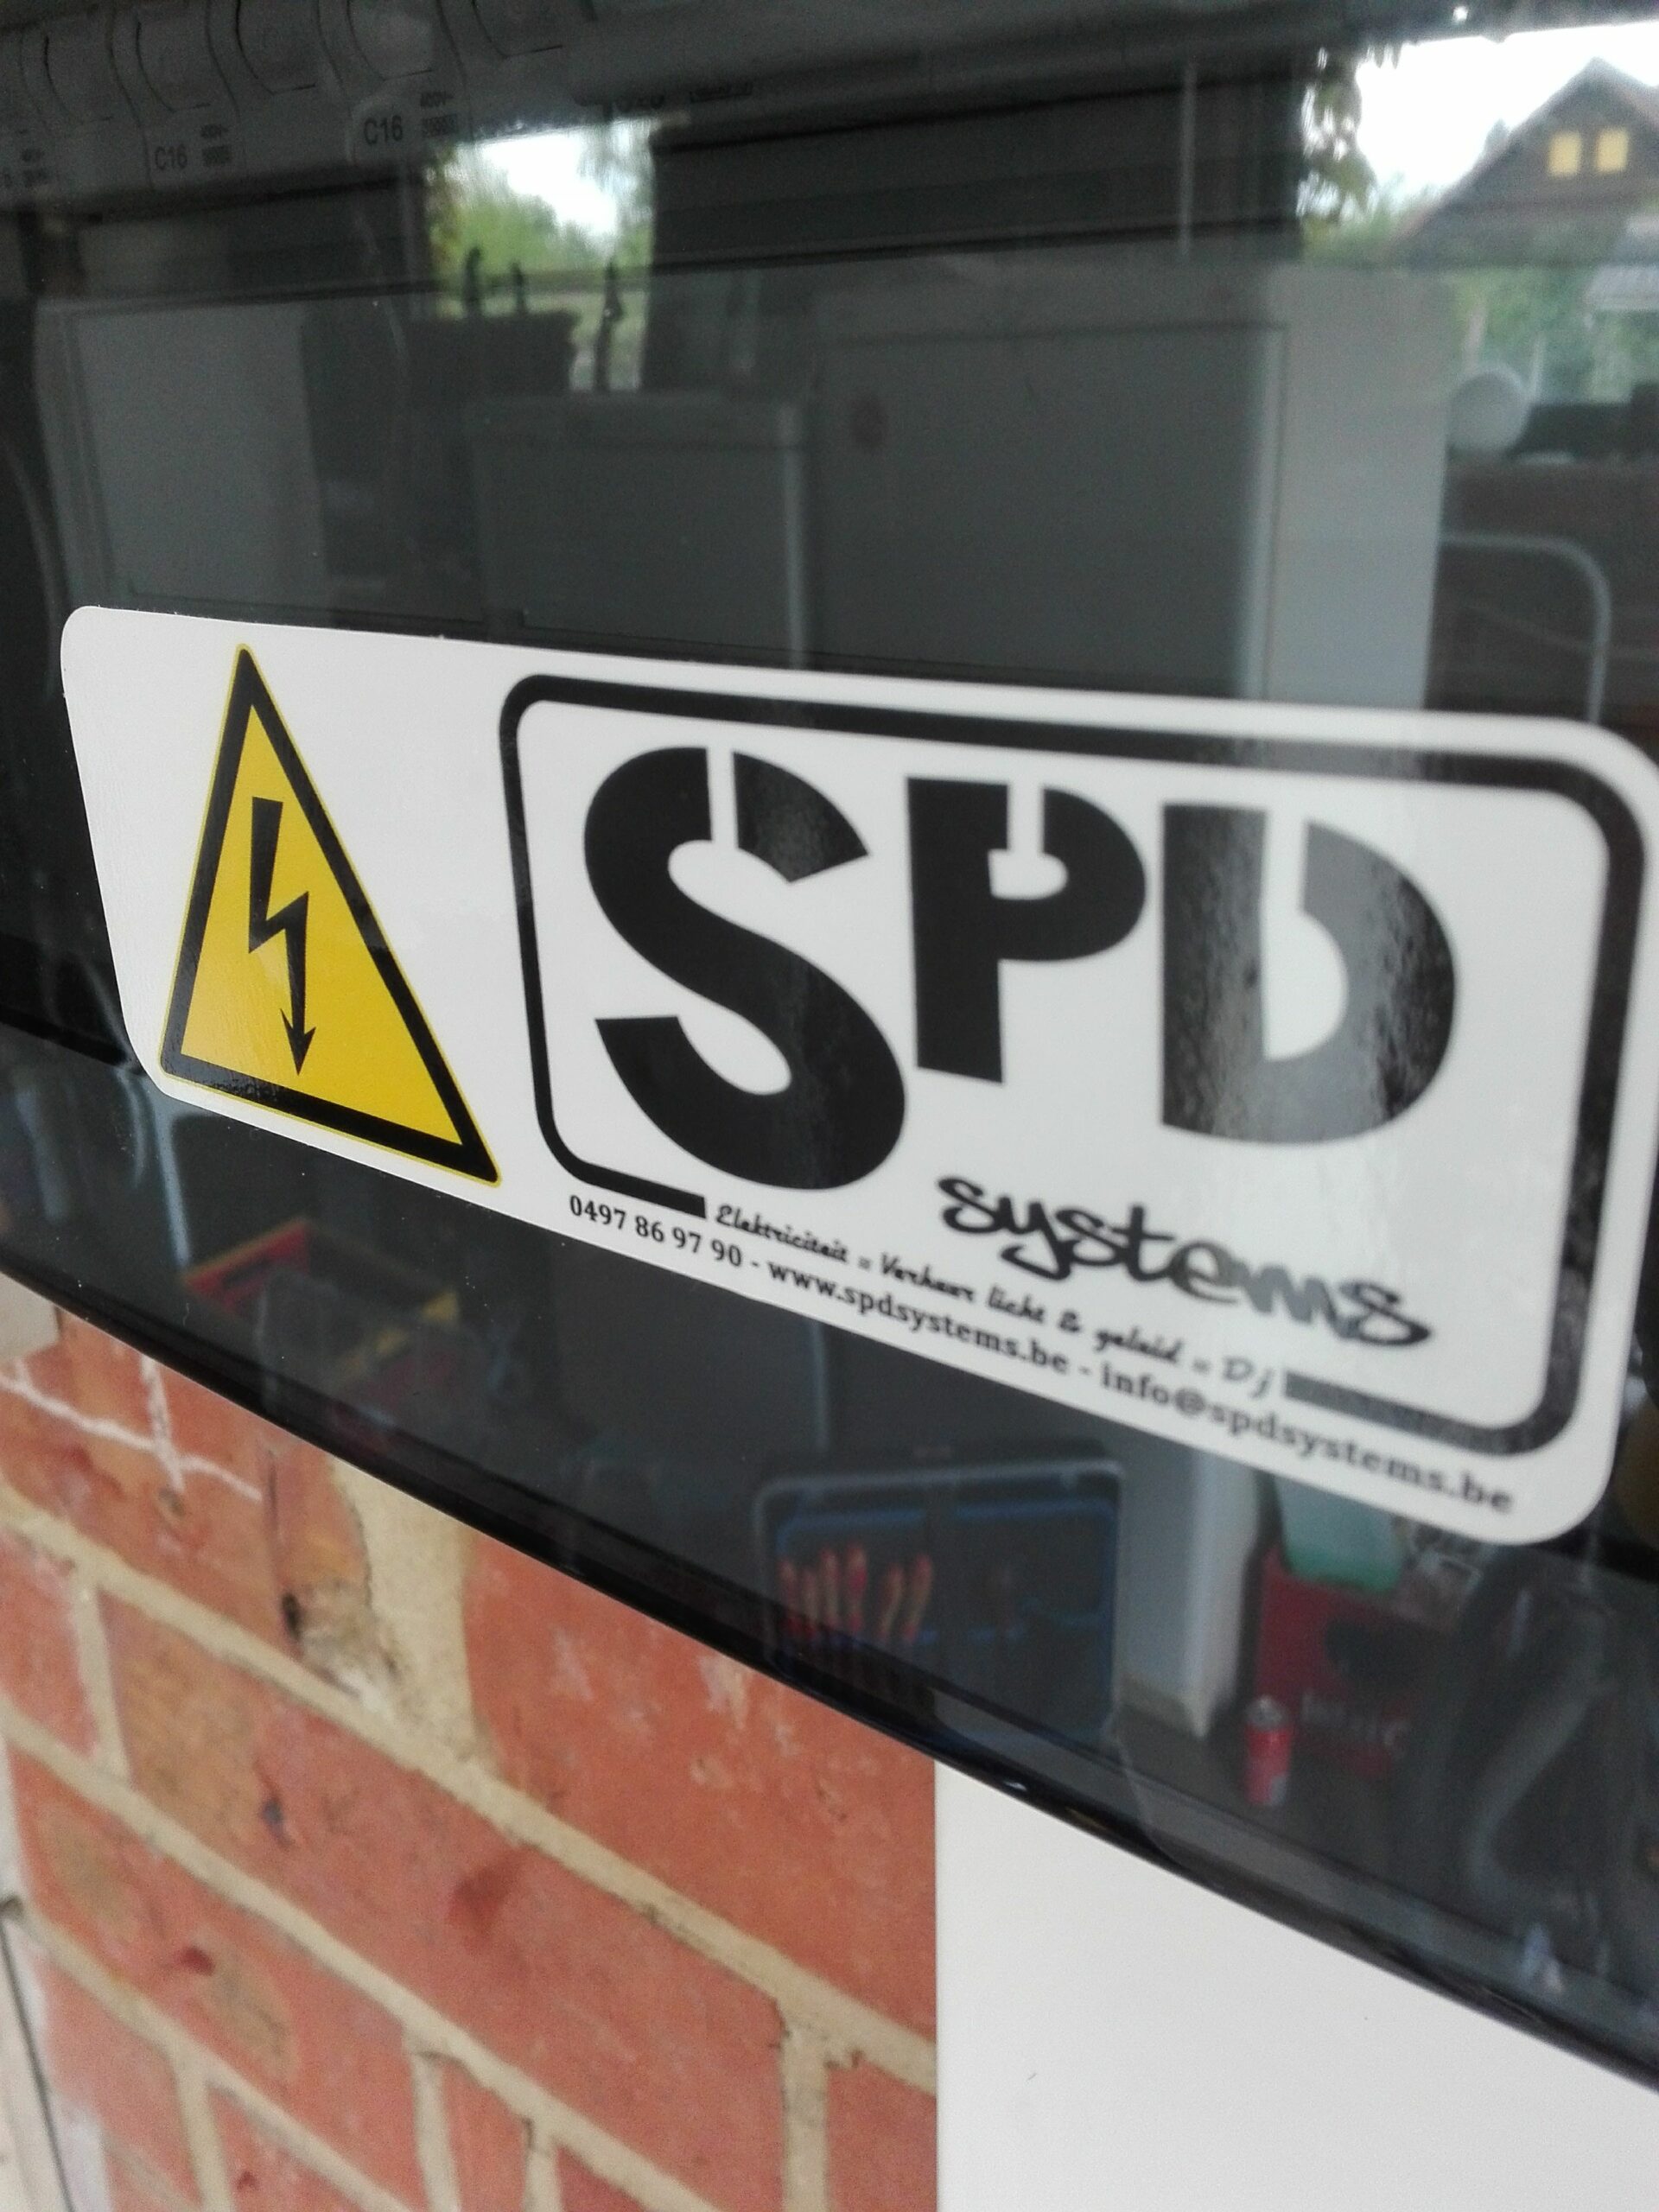 SPD Systems - Limburg